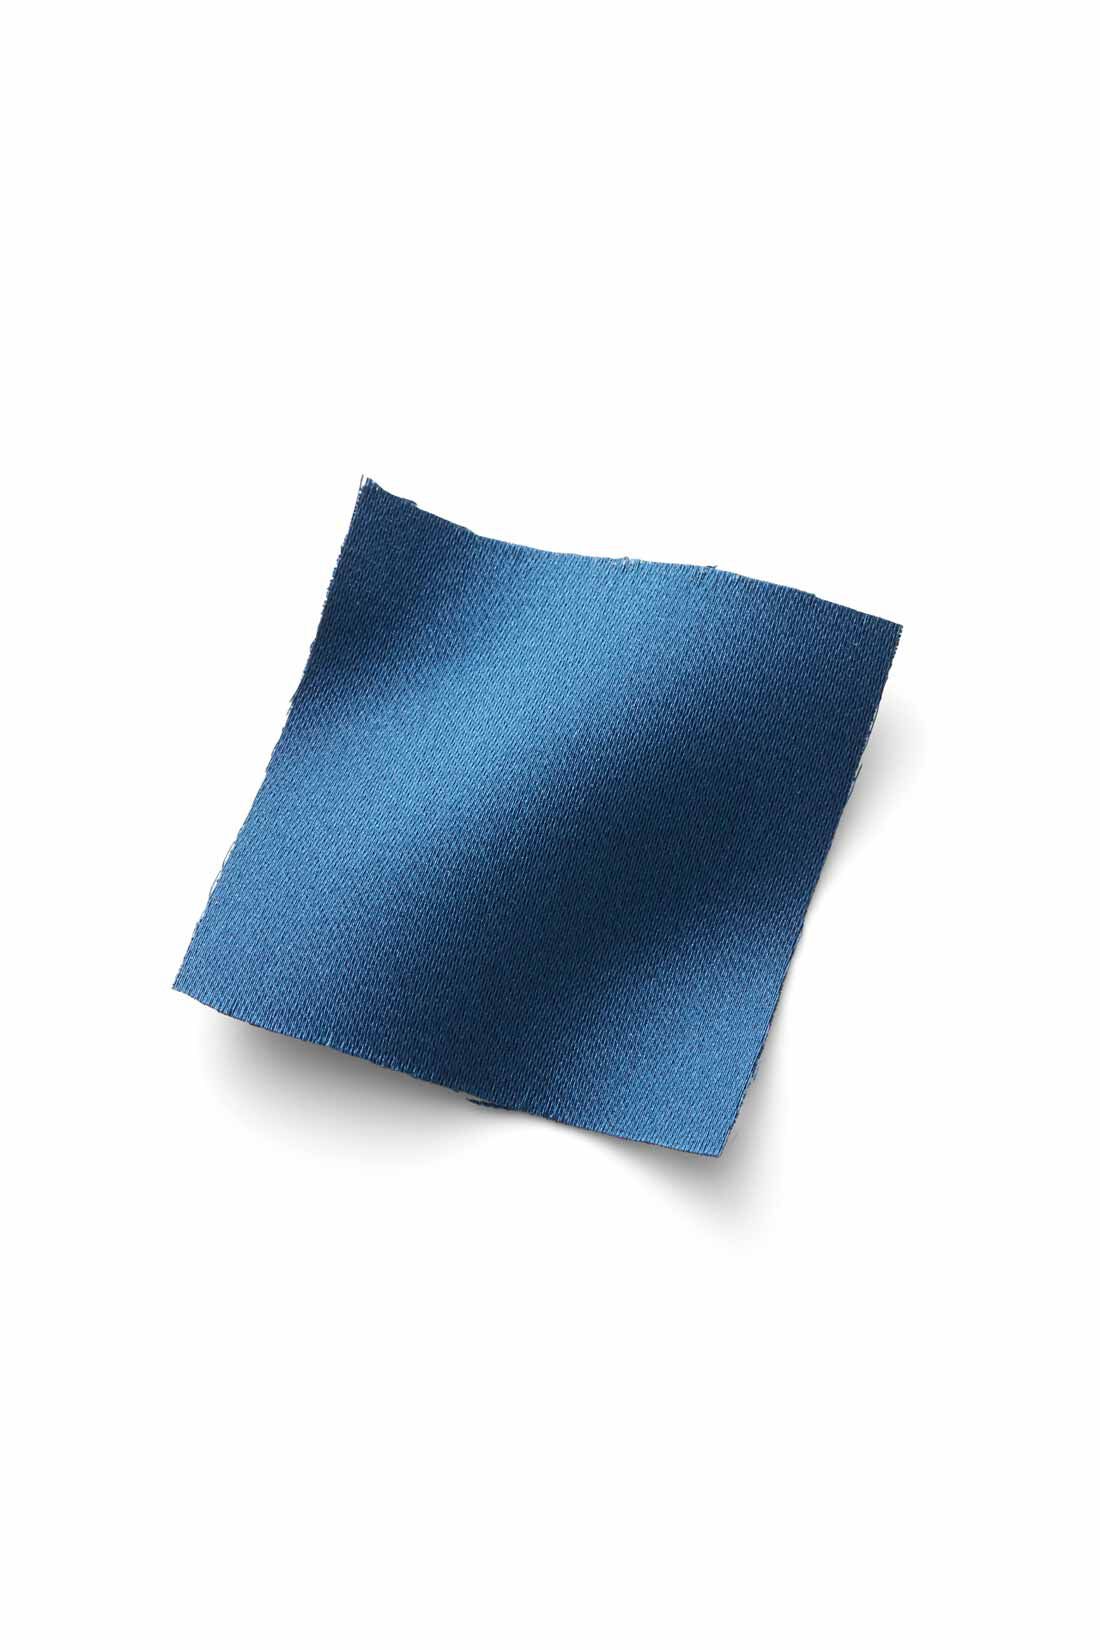 IEDIT[イディット]　サテンの光沢が美しいセミサーキュラースカート〈ディープブルー〉|からだのラインを拾いにくい厚手のサテン素材を厳選。